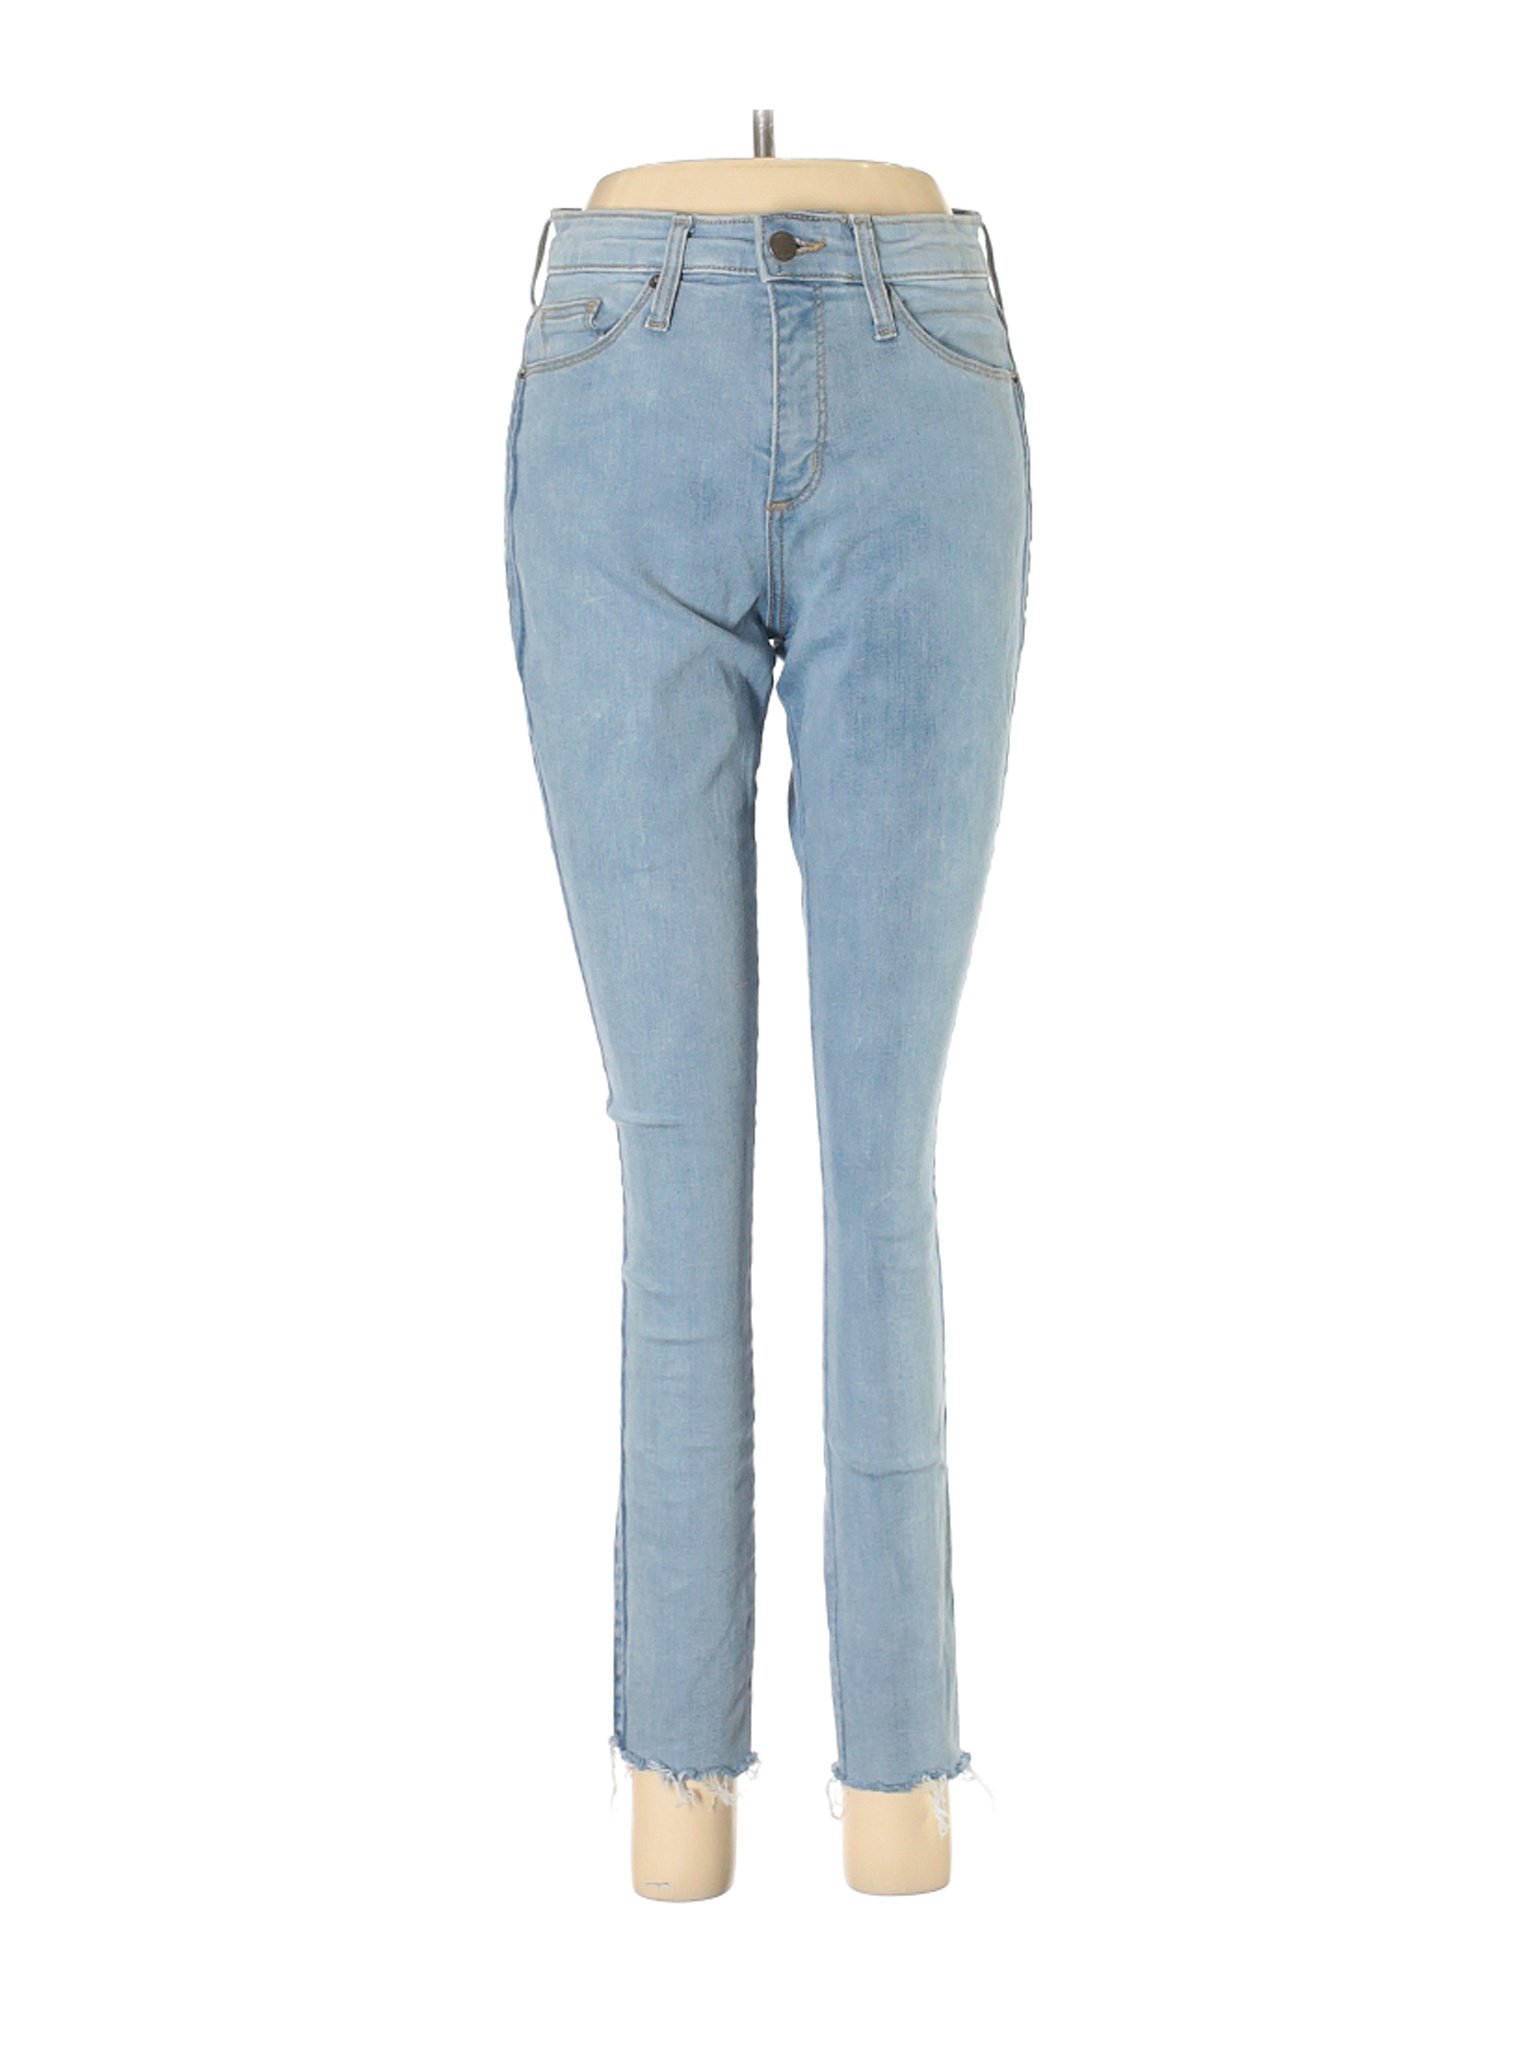 Universal Thread Women Blue Jeans 6 | eBay